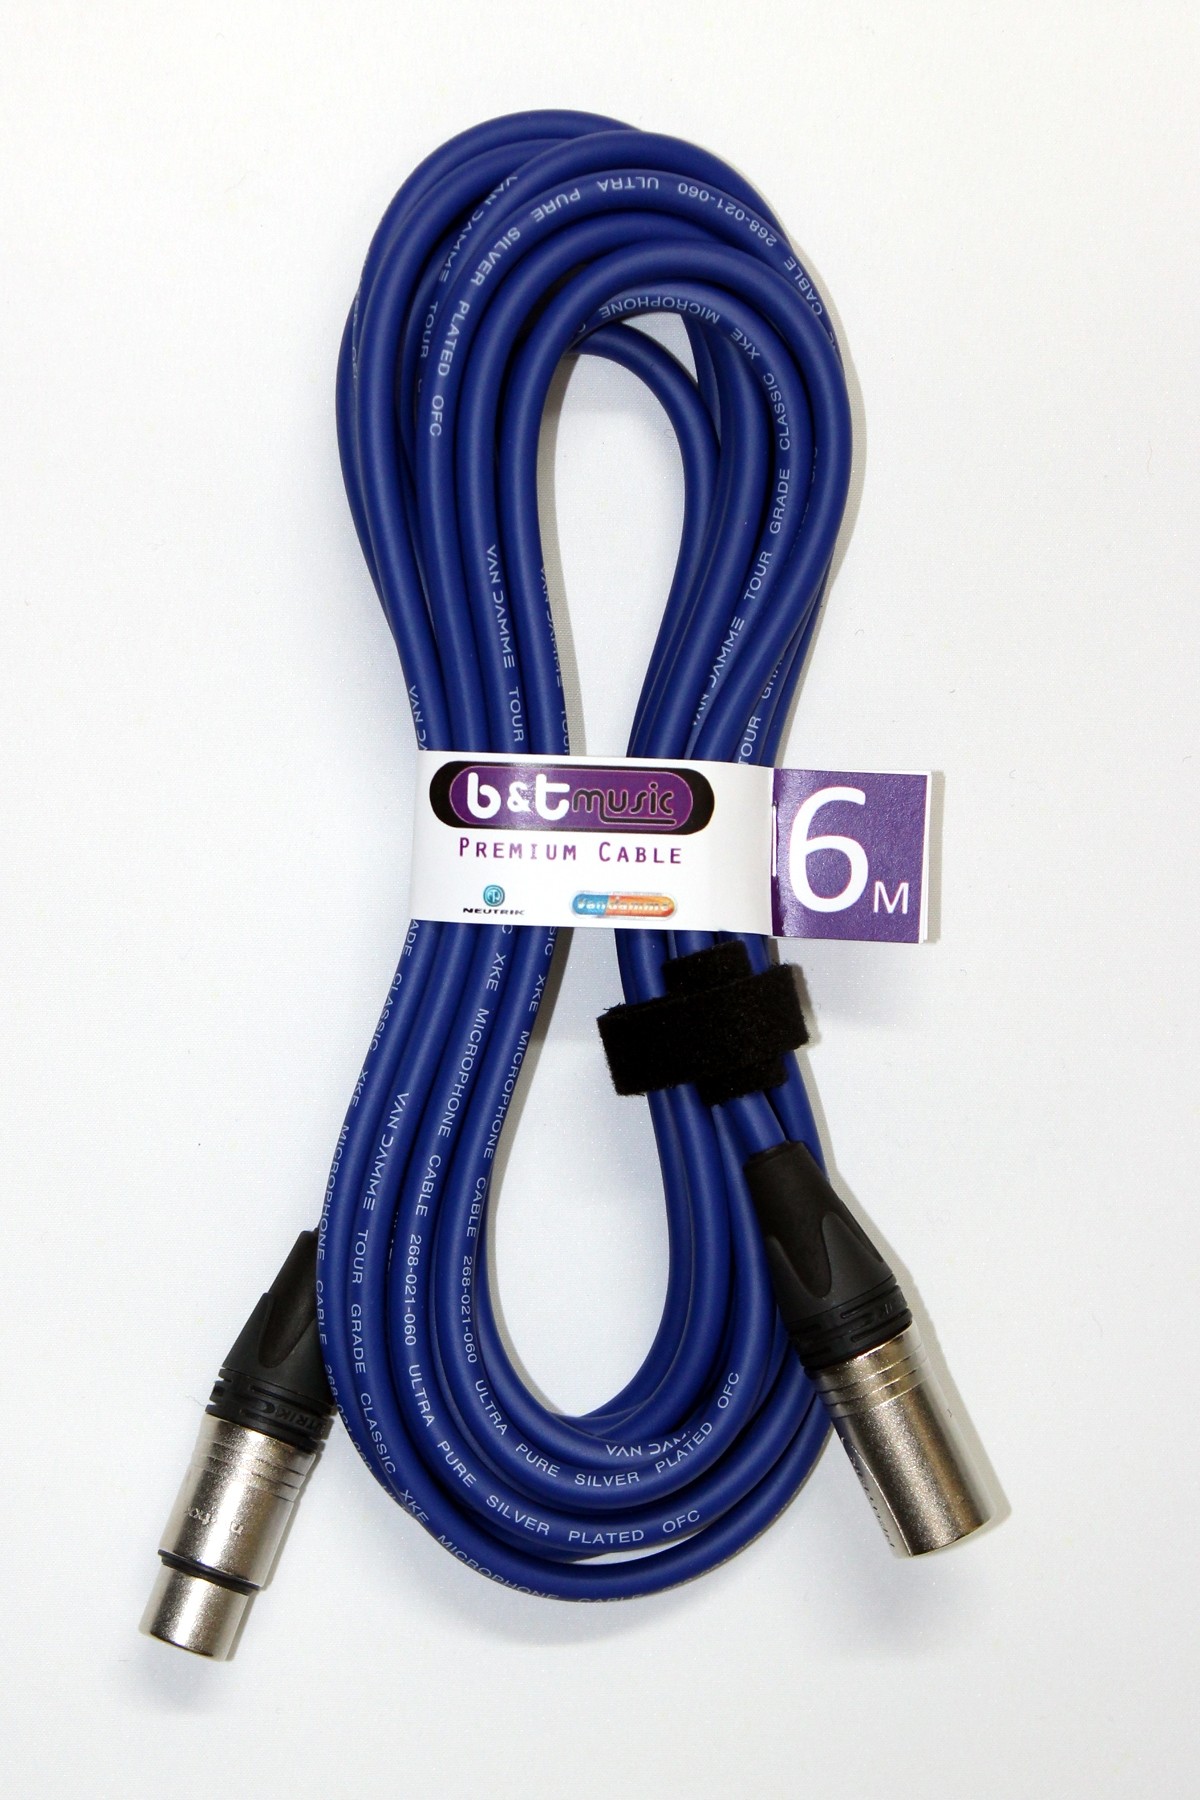 B&T Music Premium Cable 6m XLR To XLR - Blue